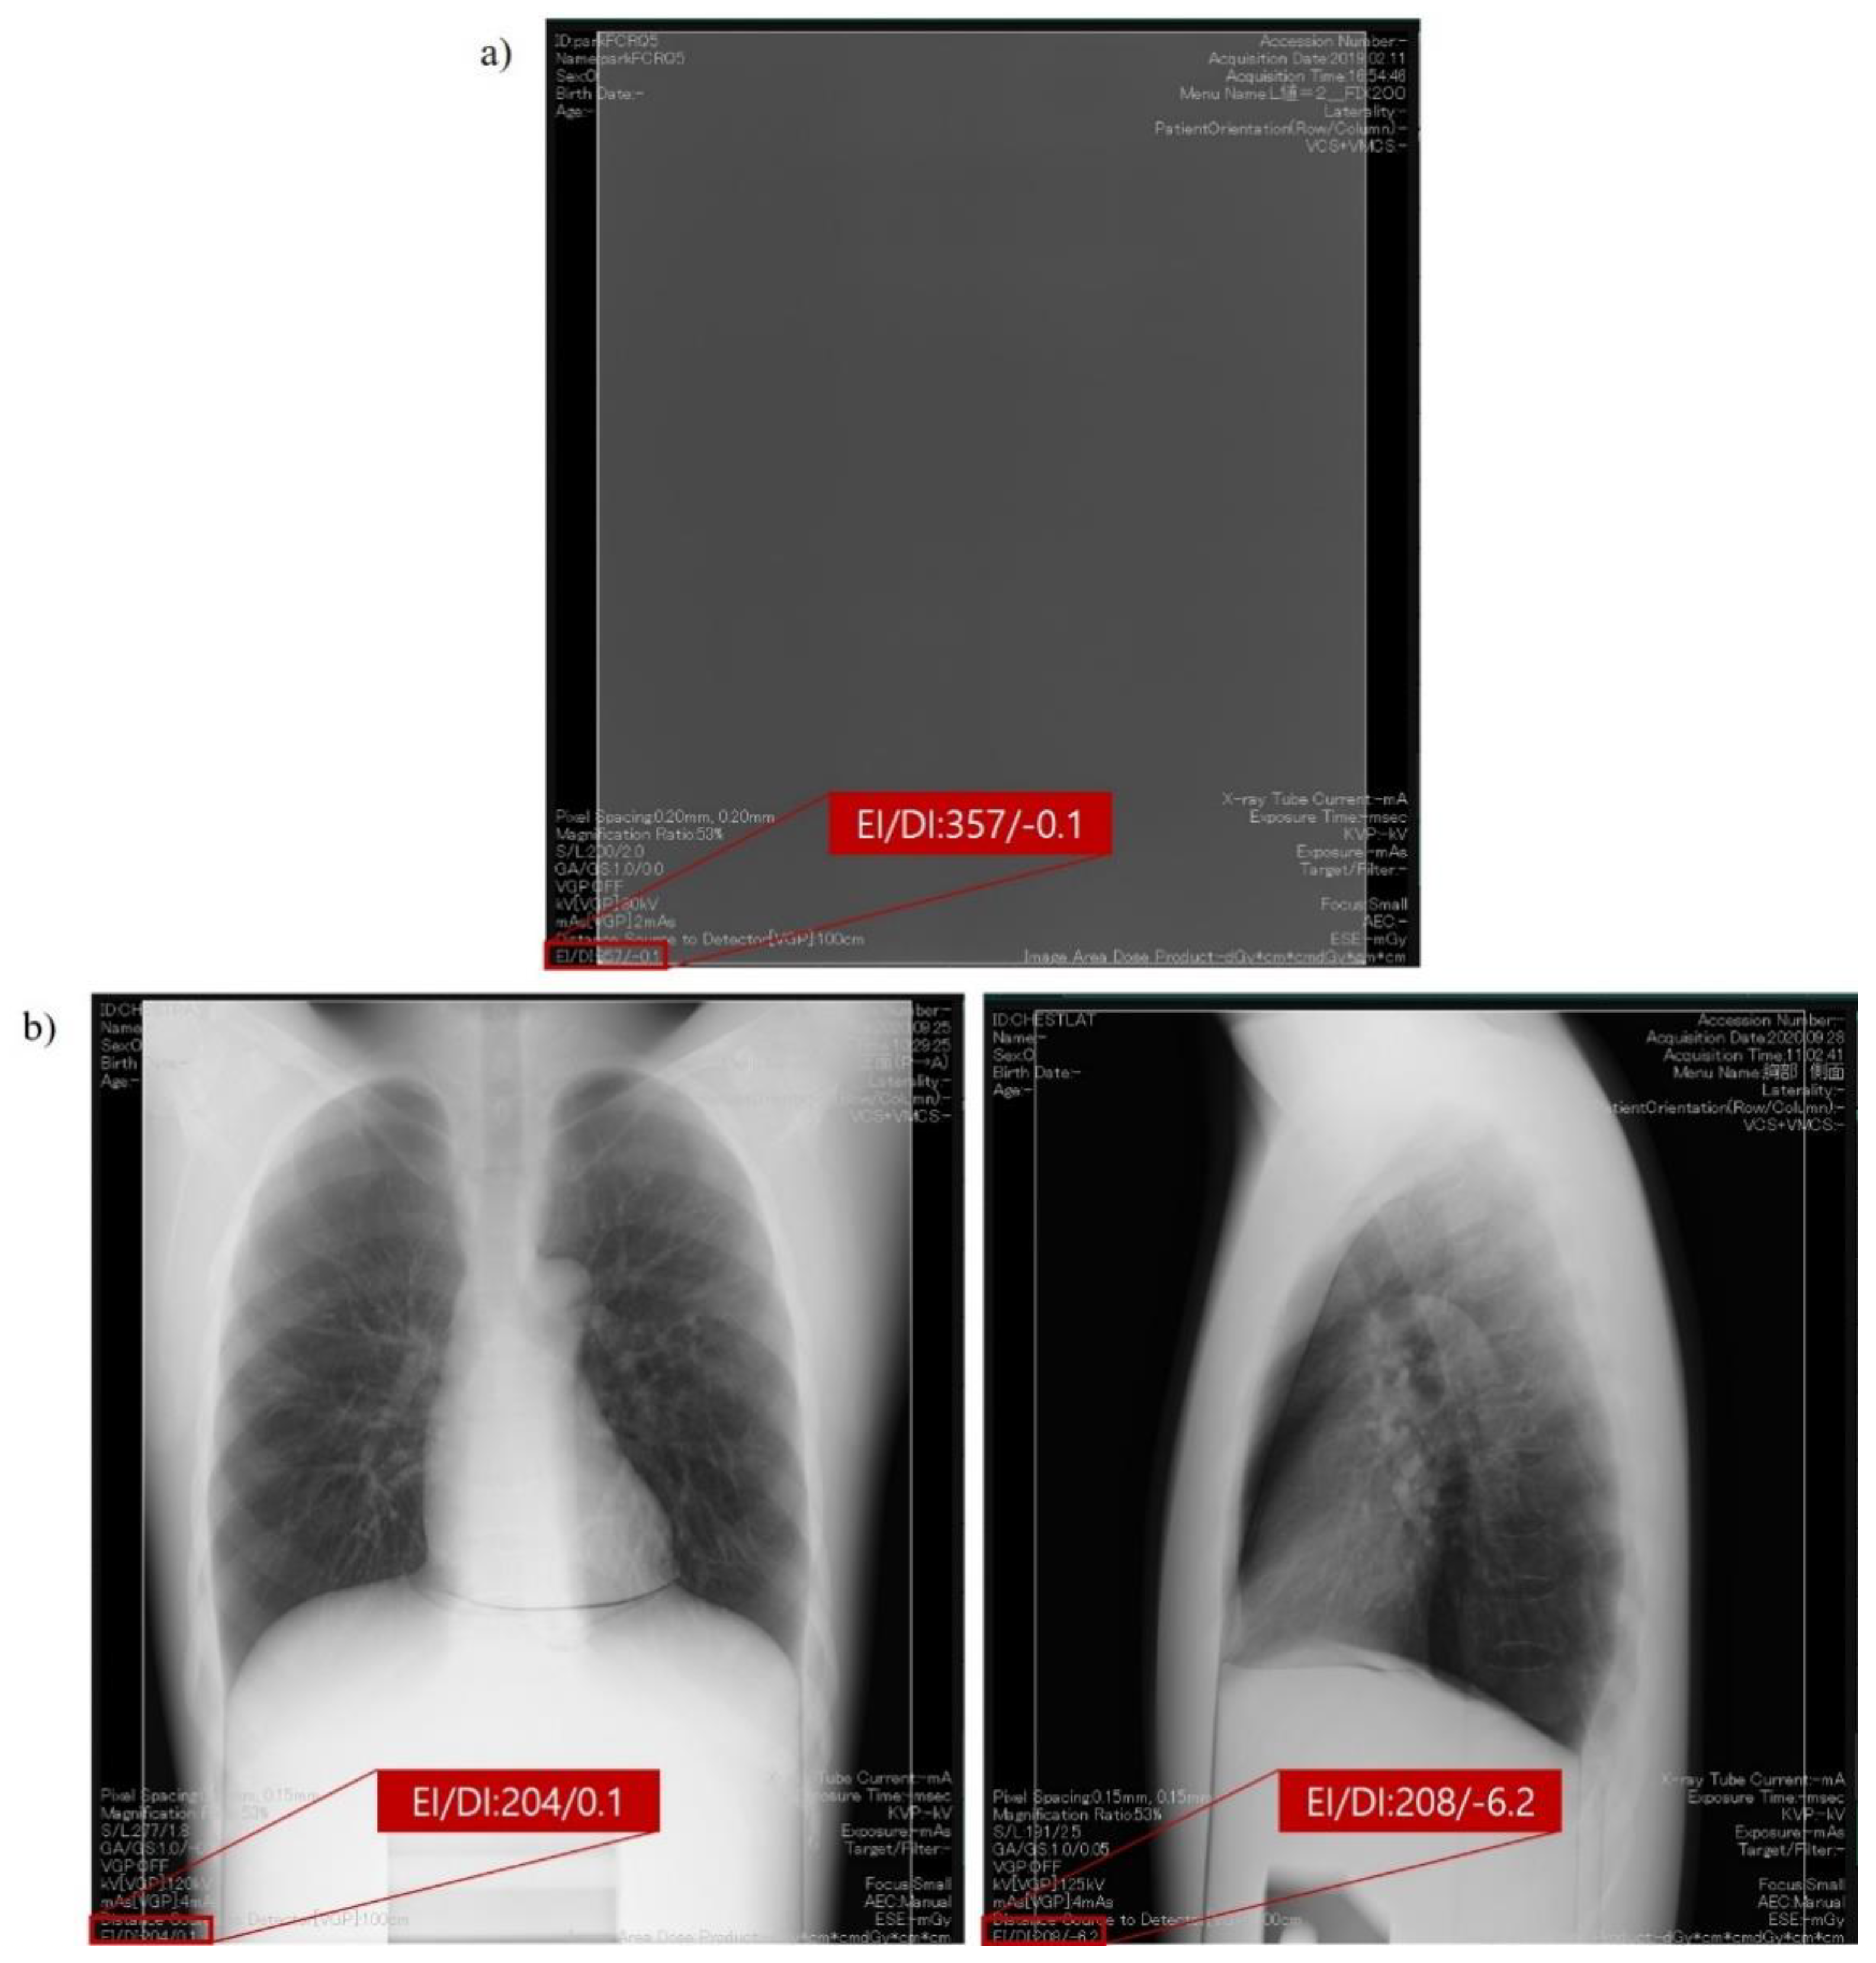 exposure to x ray